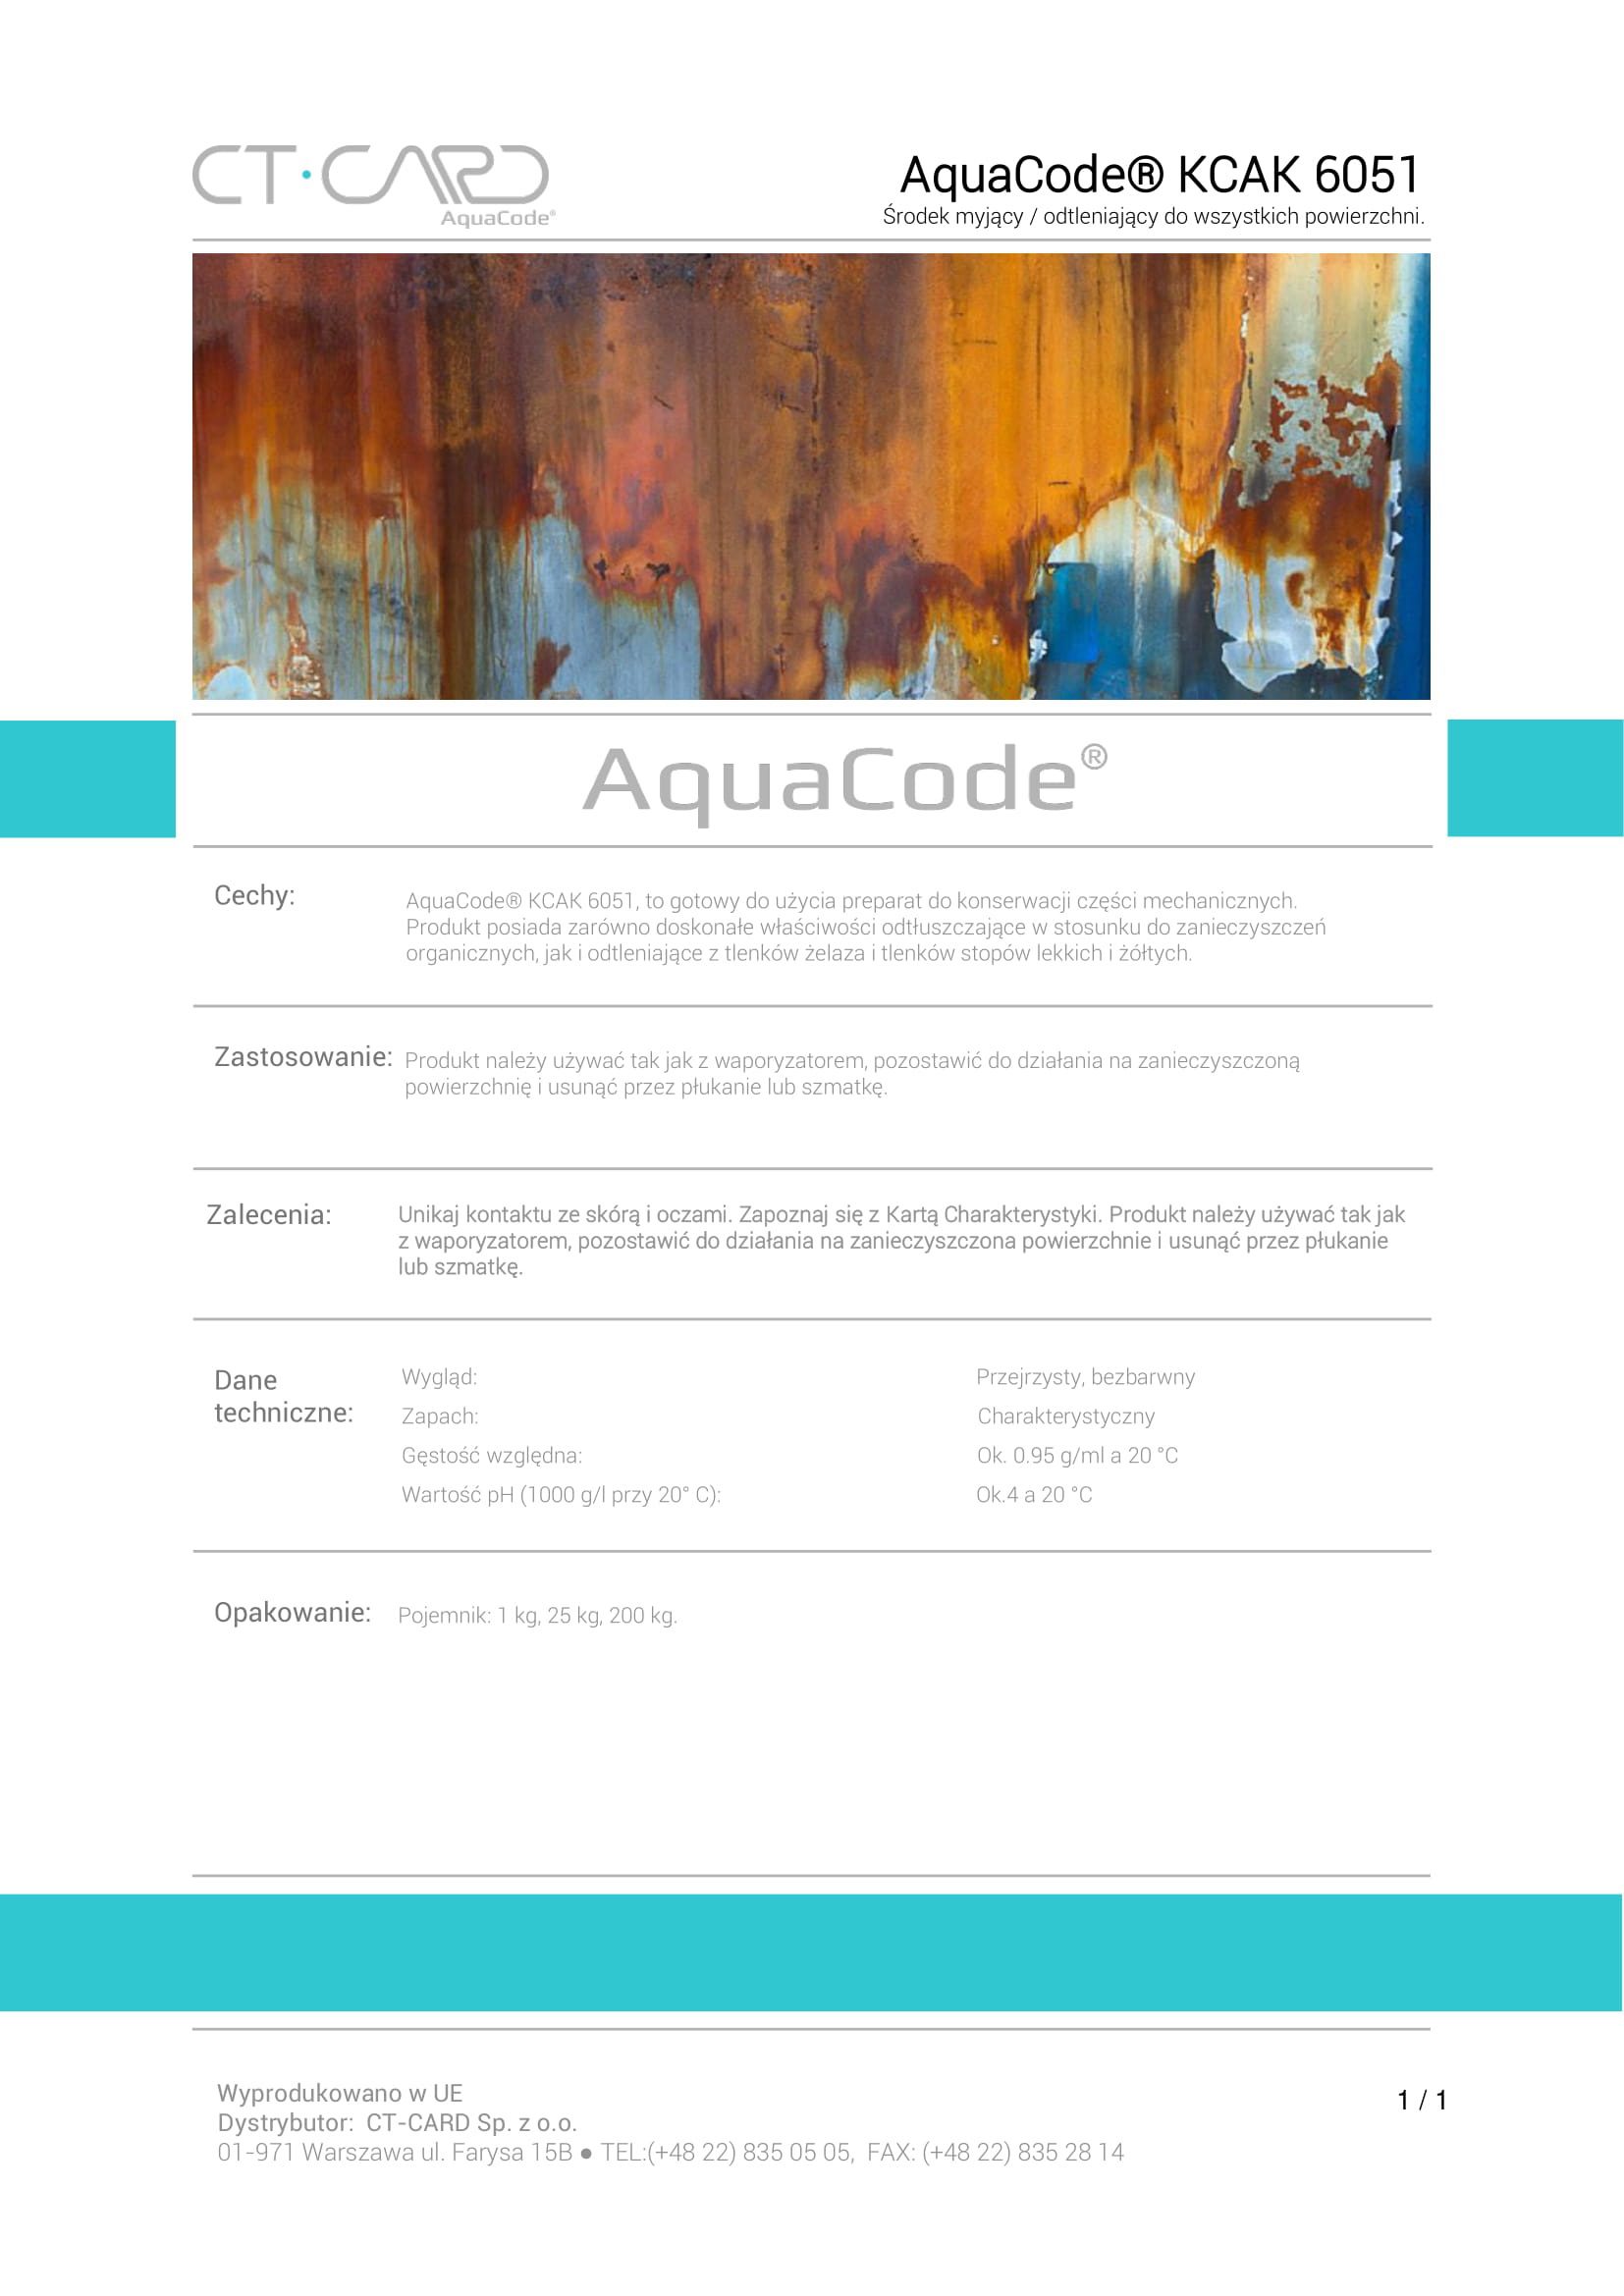 AquaCode_KCAK_6051-1